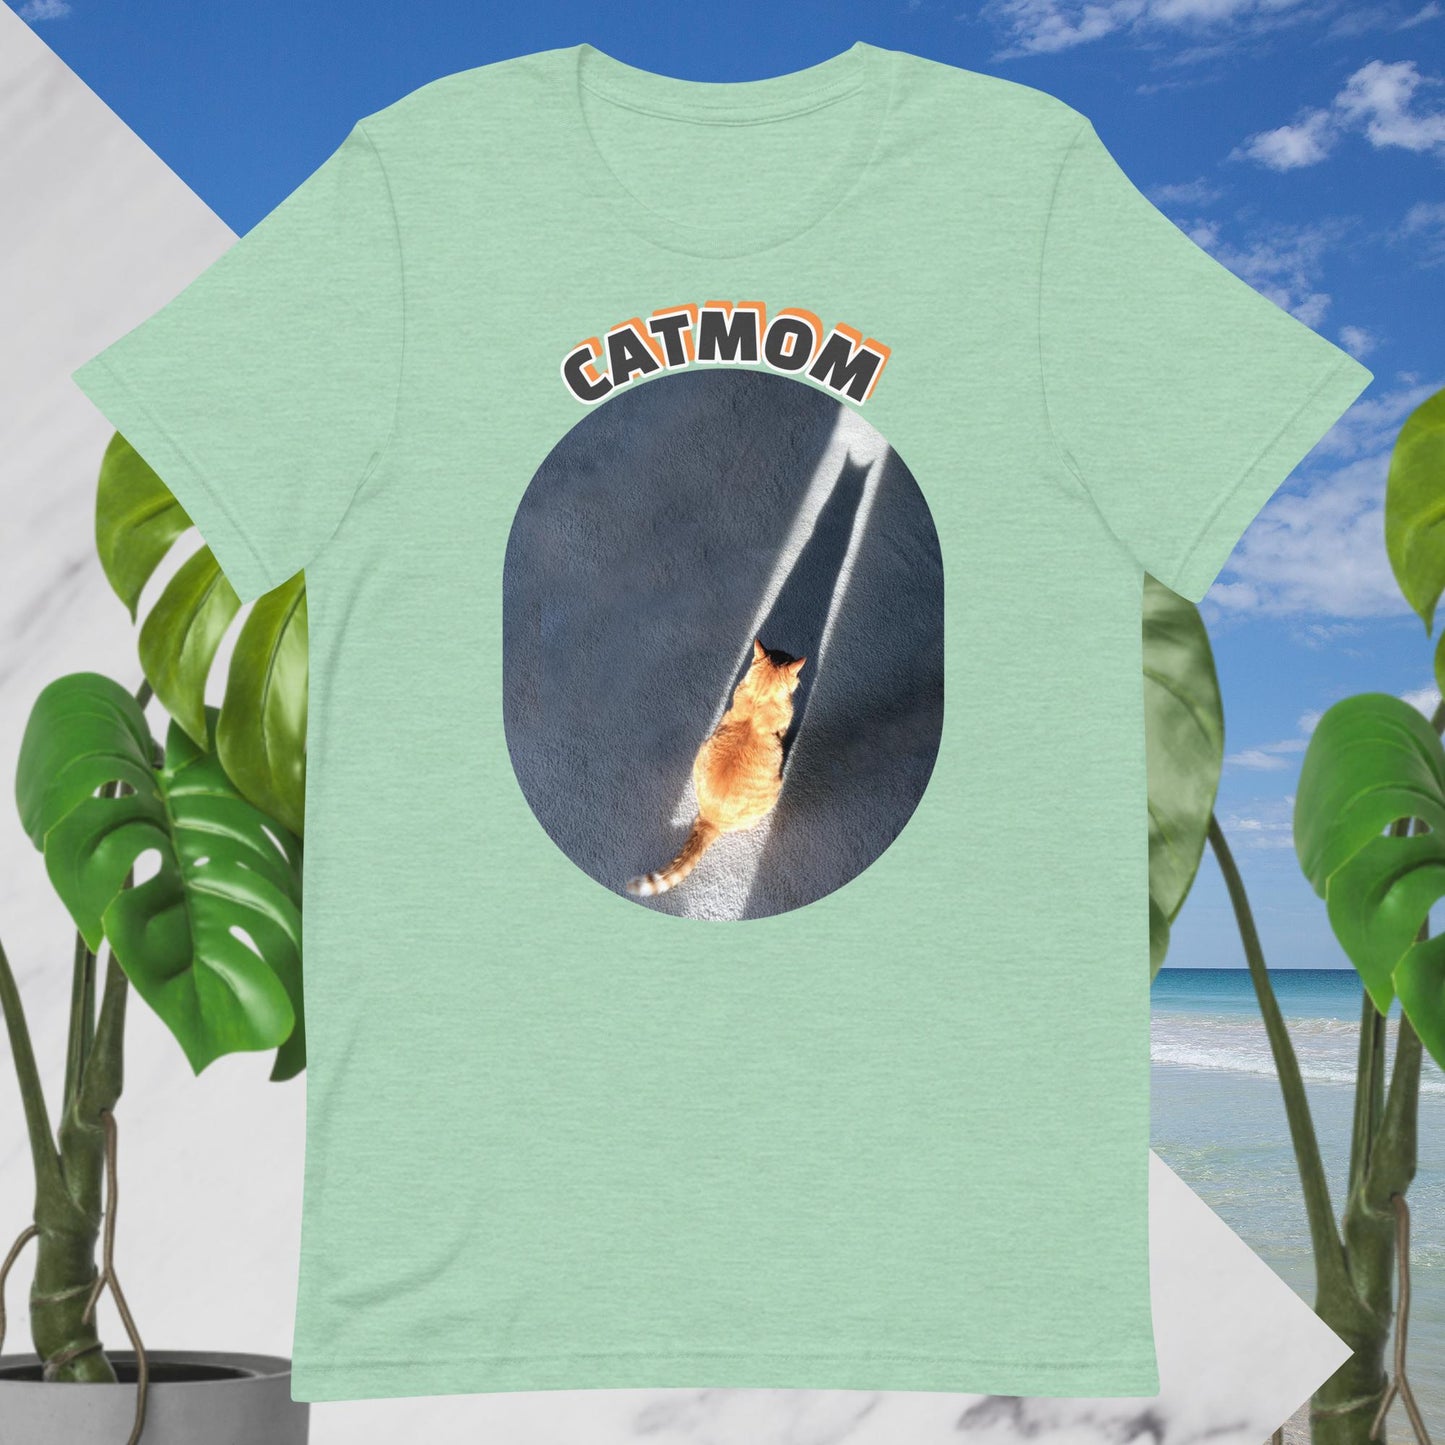 The Catmom T Shirt